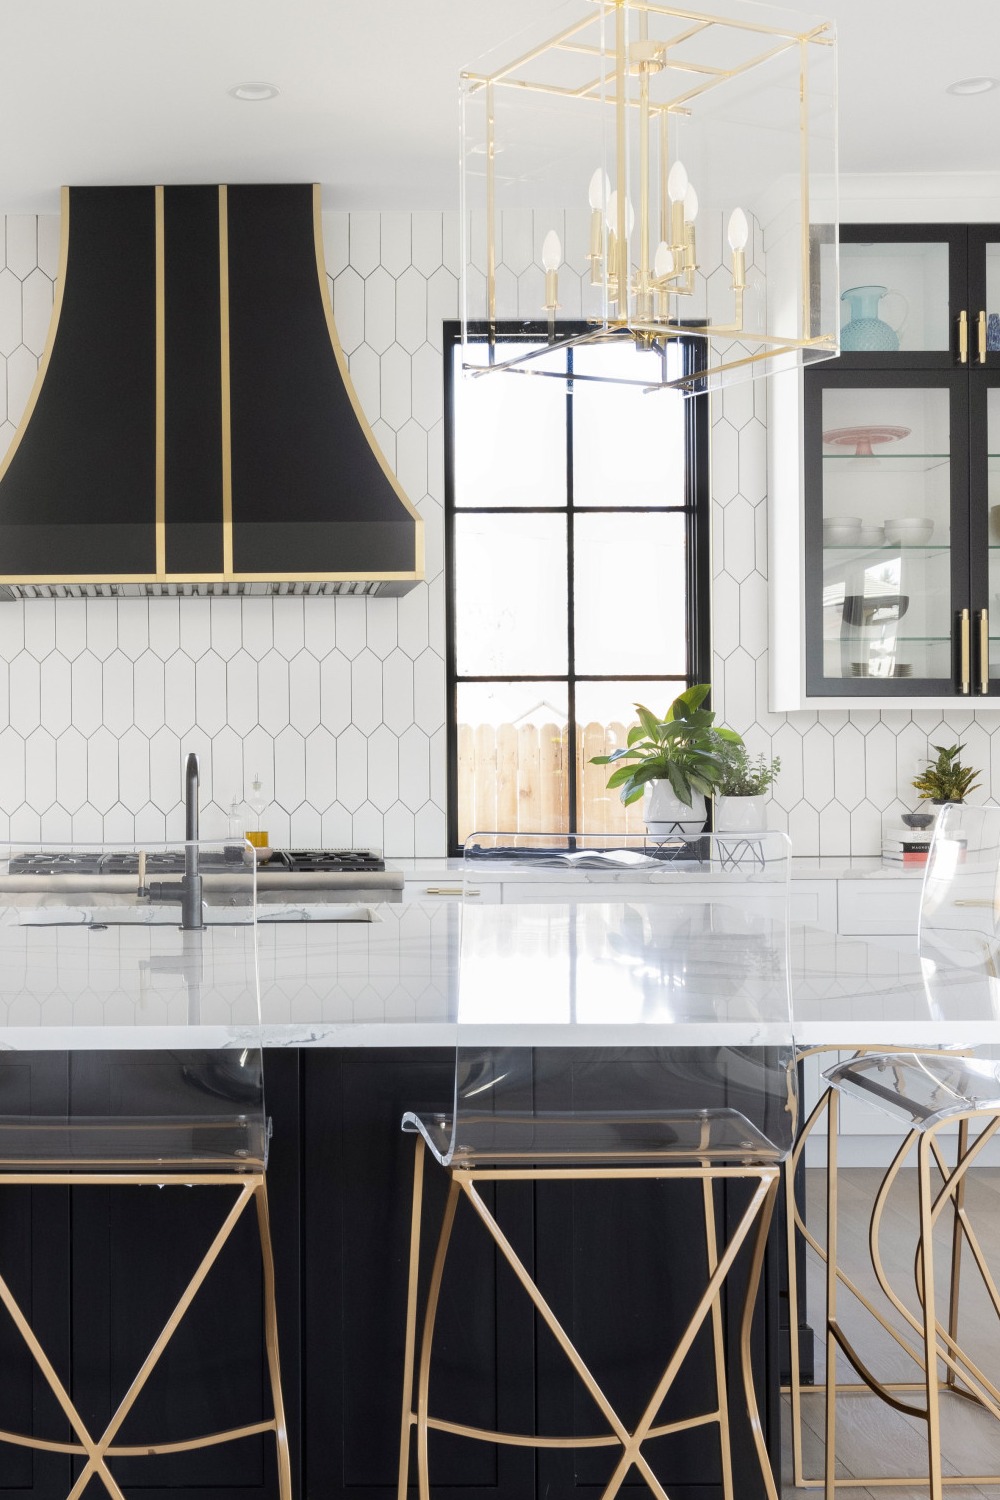 Black Cabinets Kitchen Design White Backsplash Wood Floor Quartz Countertops Gold Accents